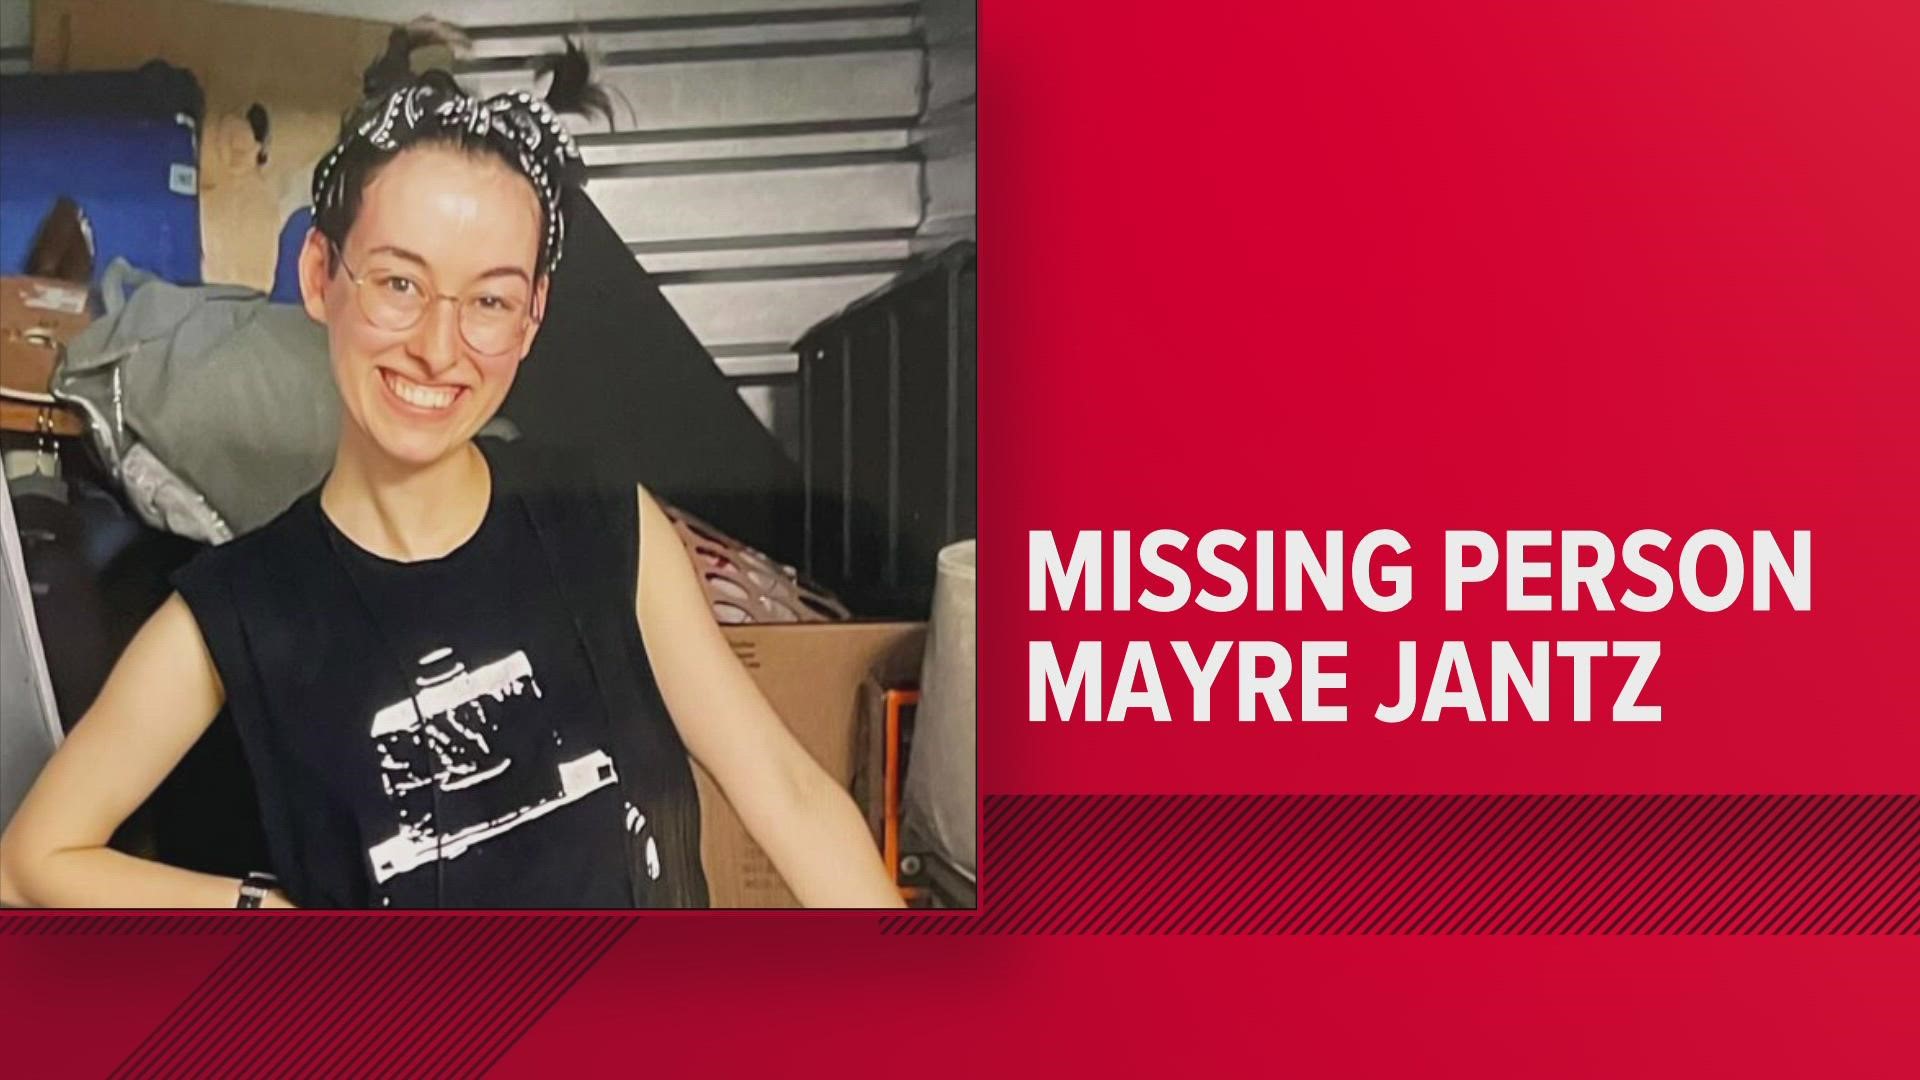 Mayre Jantz was was last heard from Wednesday around noon.